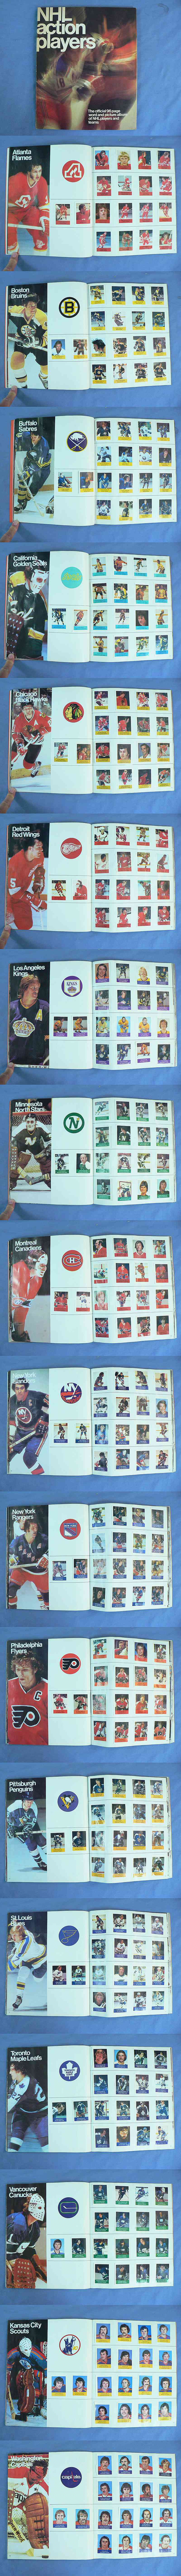 1974-75 LOBLAWS NHL ACTION PLAYERS FULL SET 324/324 & ALBUM photo